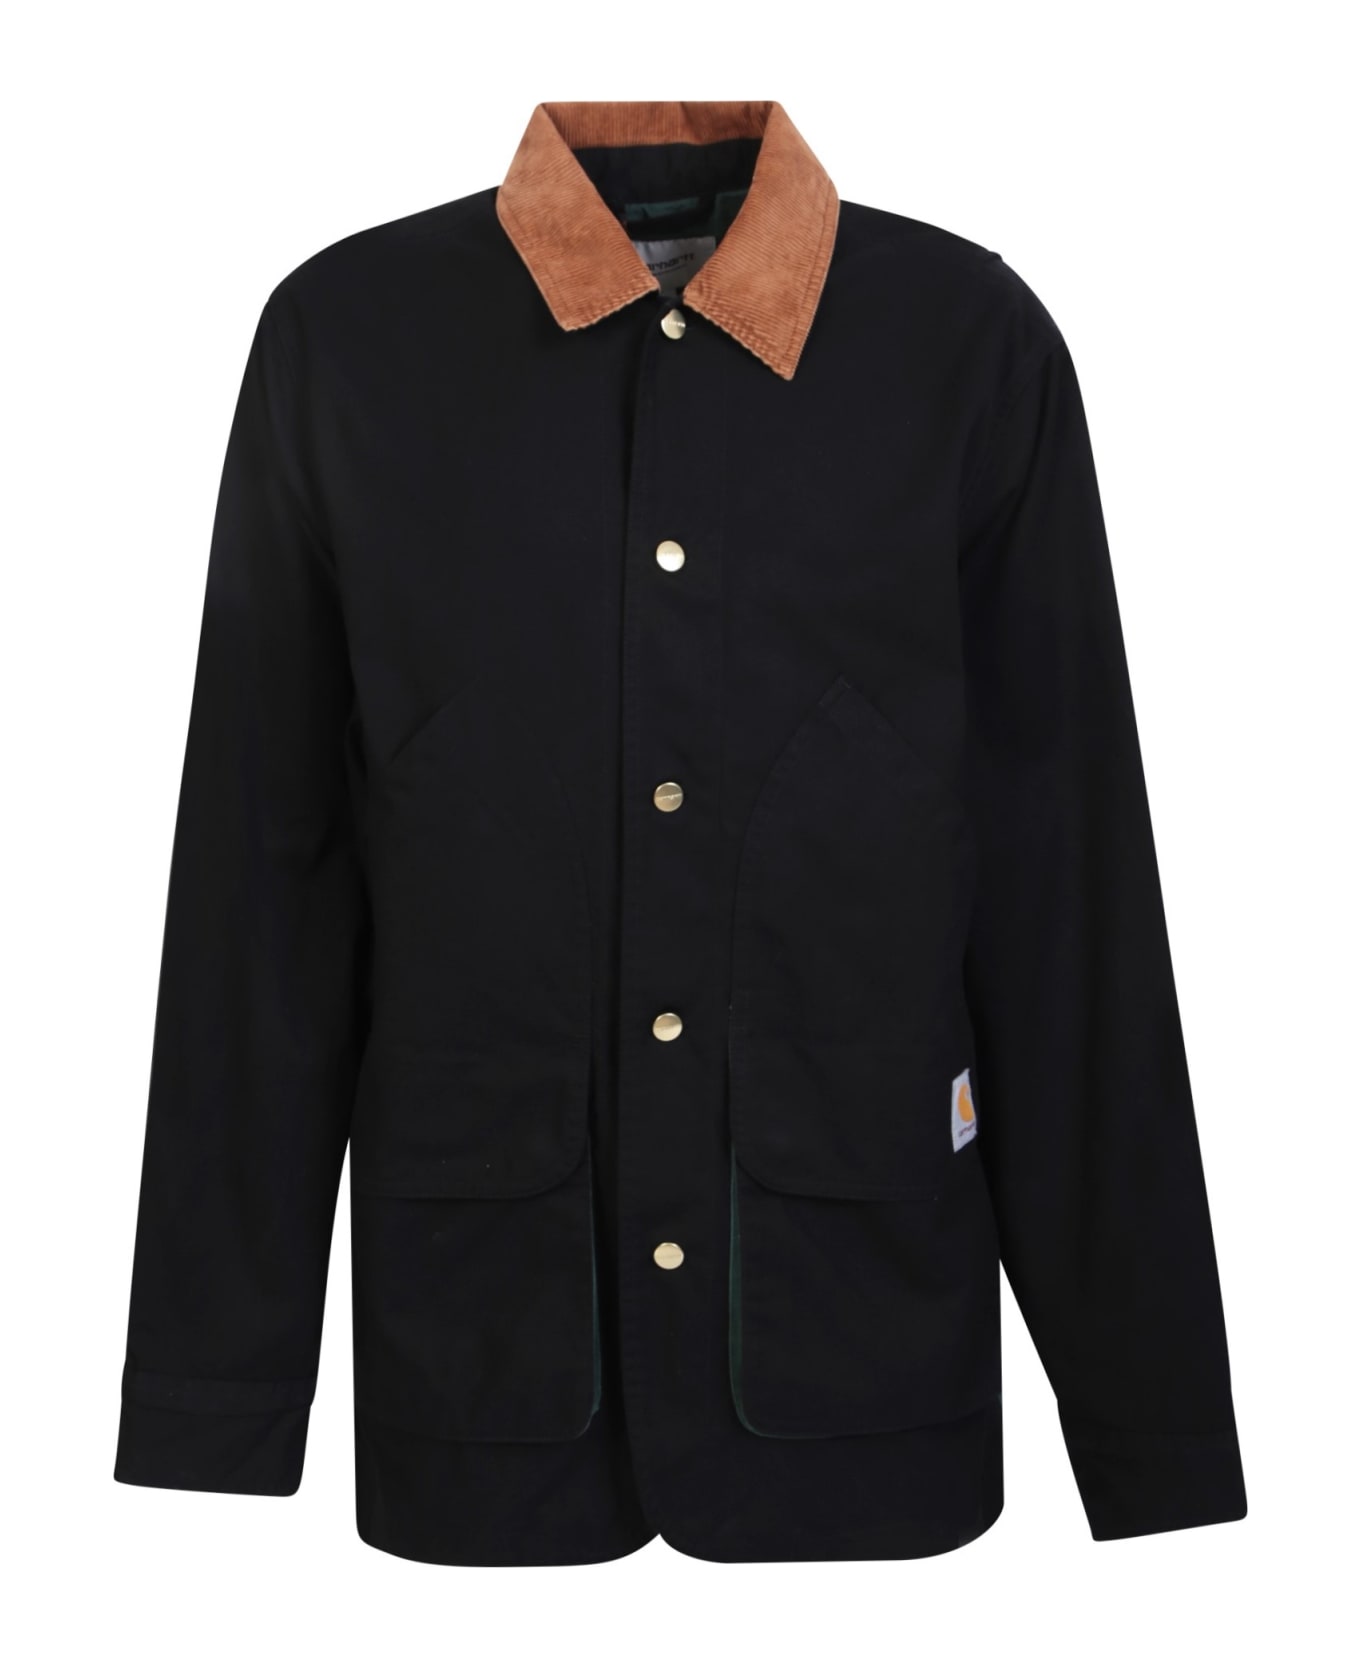 Carhartt Bi-color Heston Jacket - Black